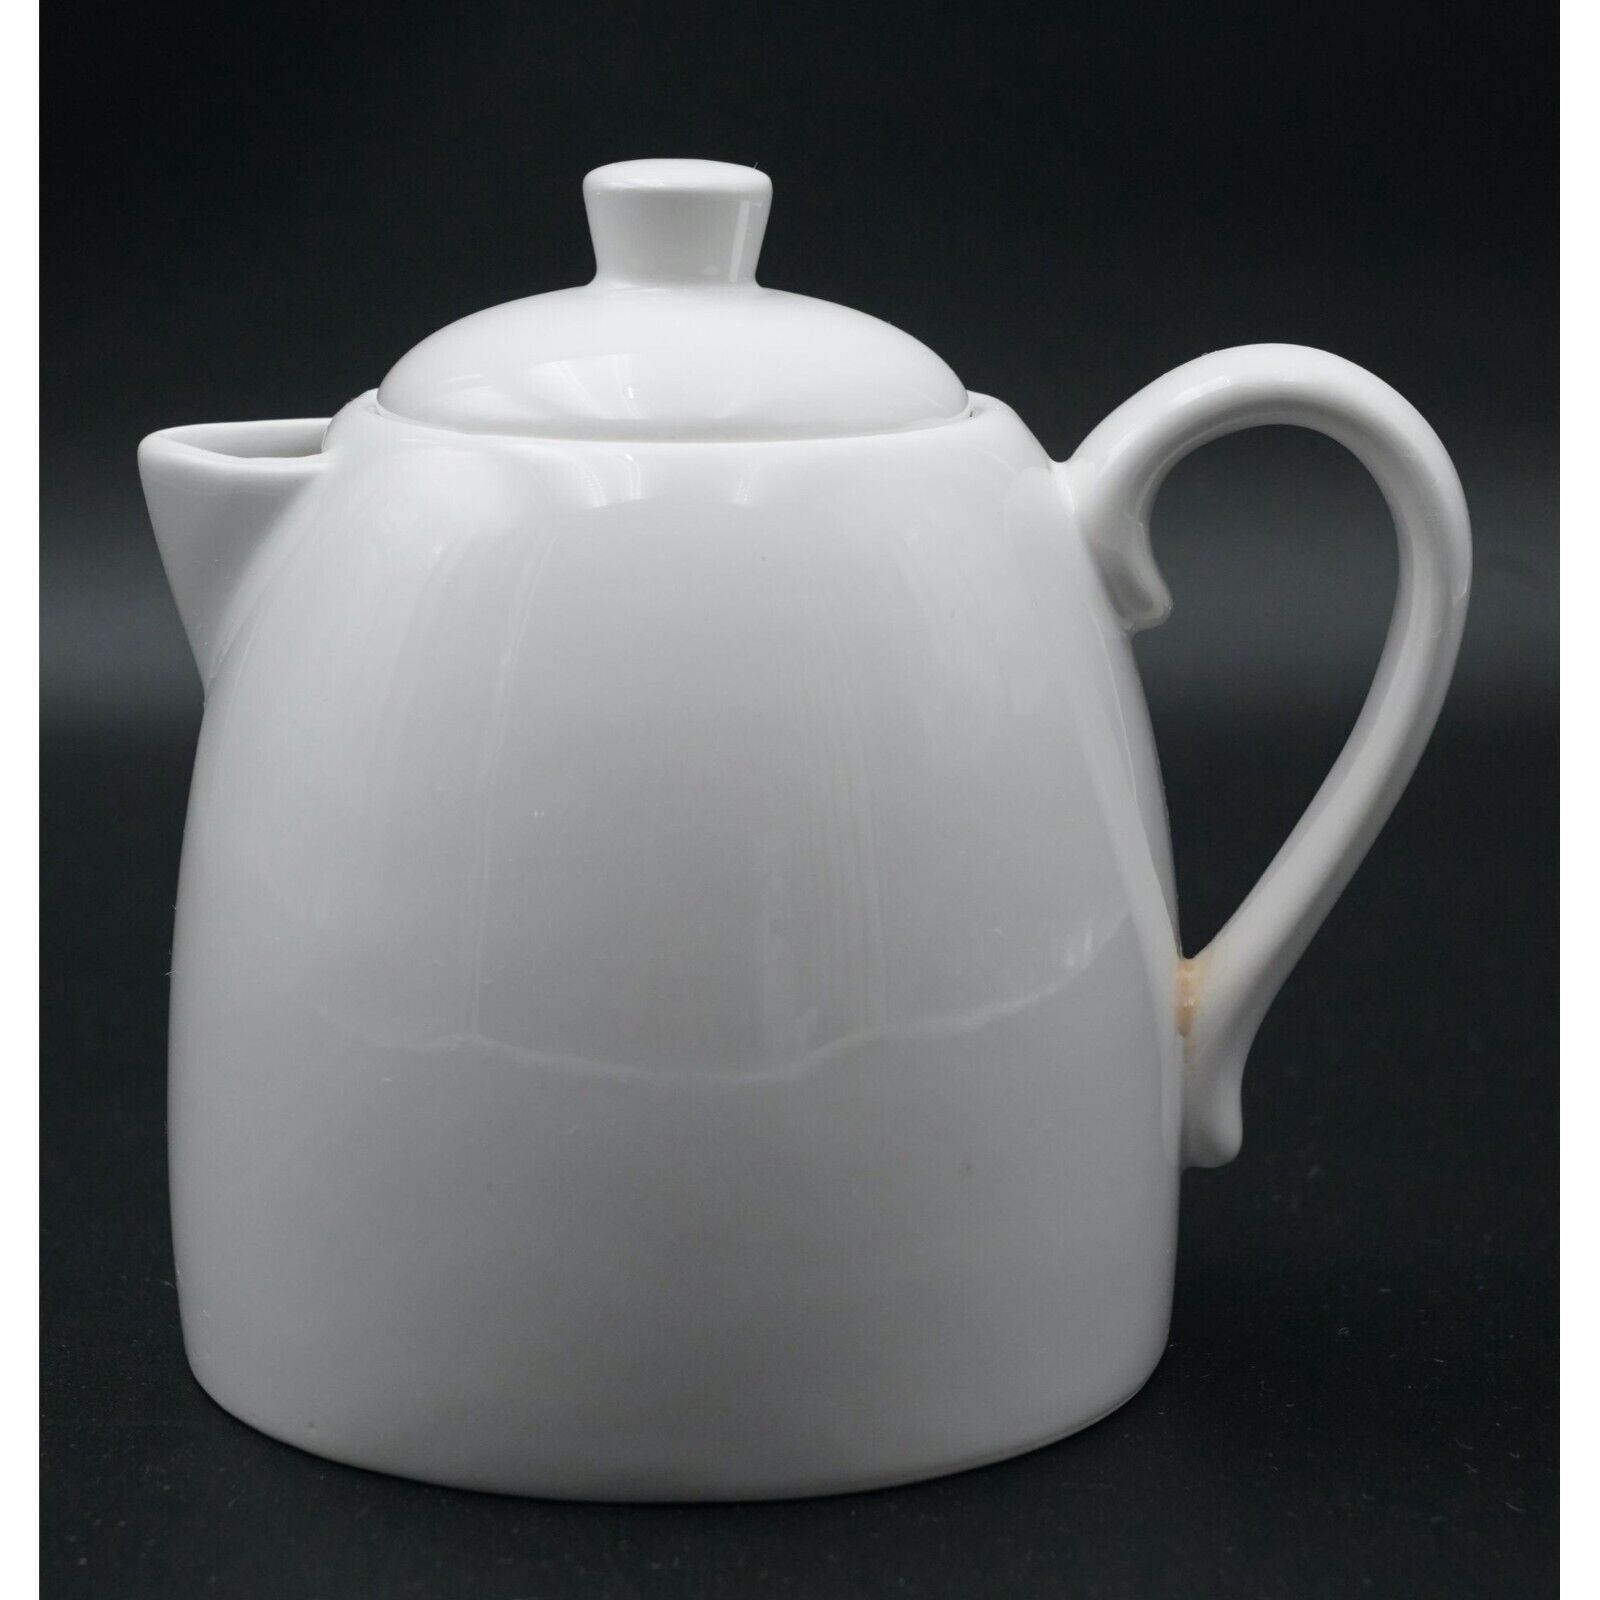 Starbucks White Ceramic Teapot Coffee Carafe Pitcher 23.6 fl. oz. / 700 ml